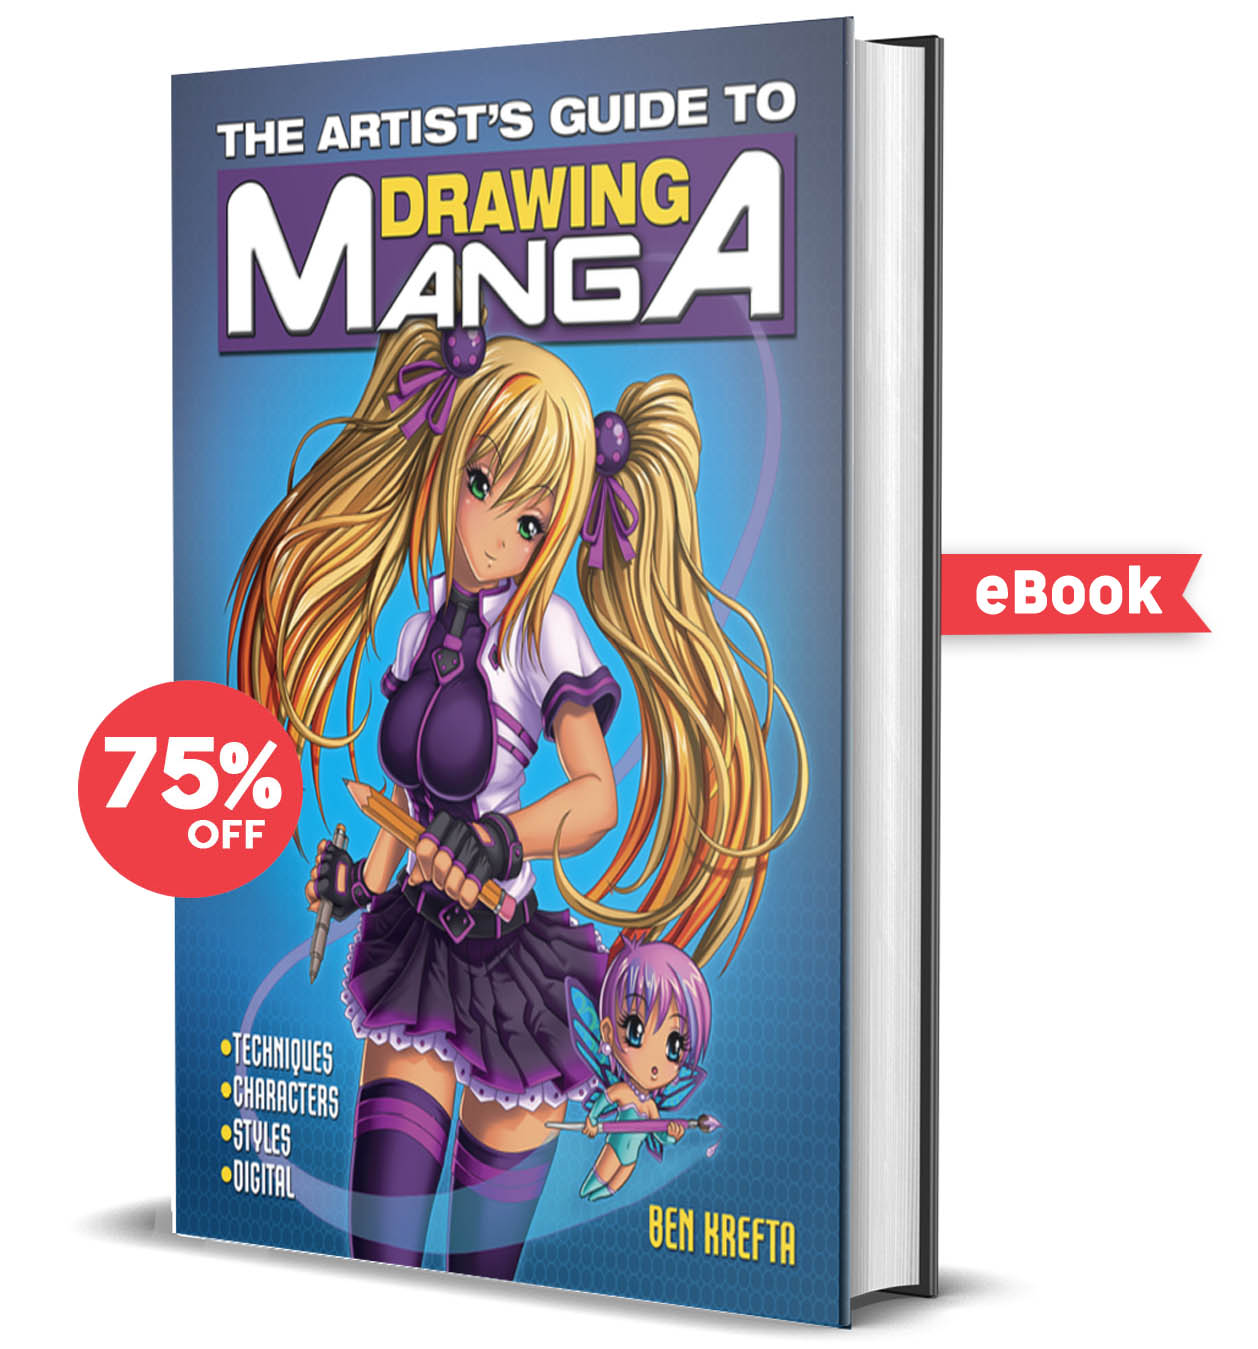 Creativeturf PH | The Artist's Guide To Drawing Manga | Ebook | Lazada PH